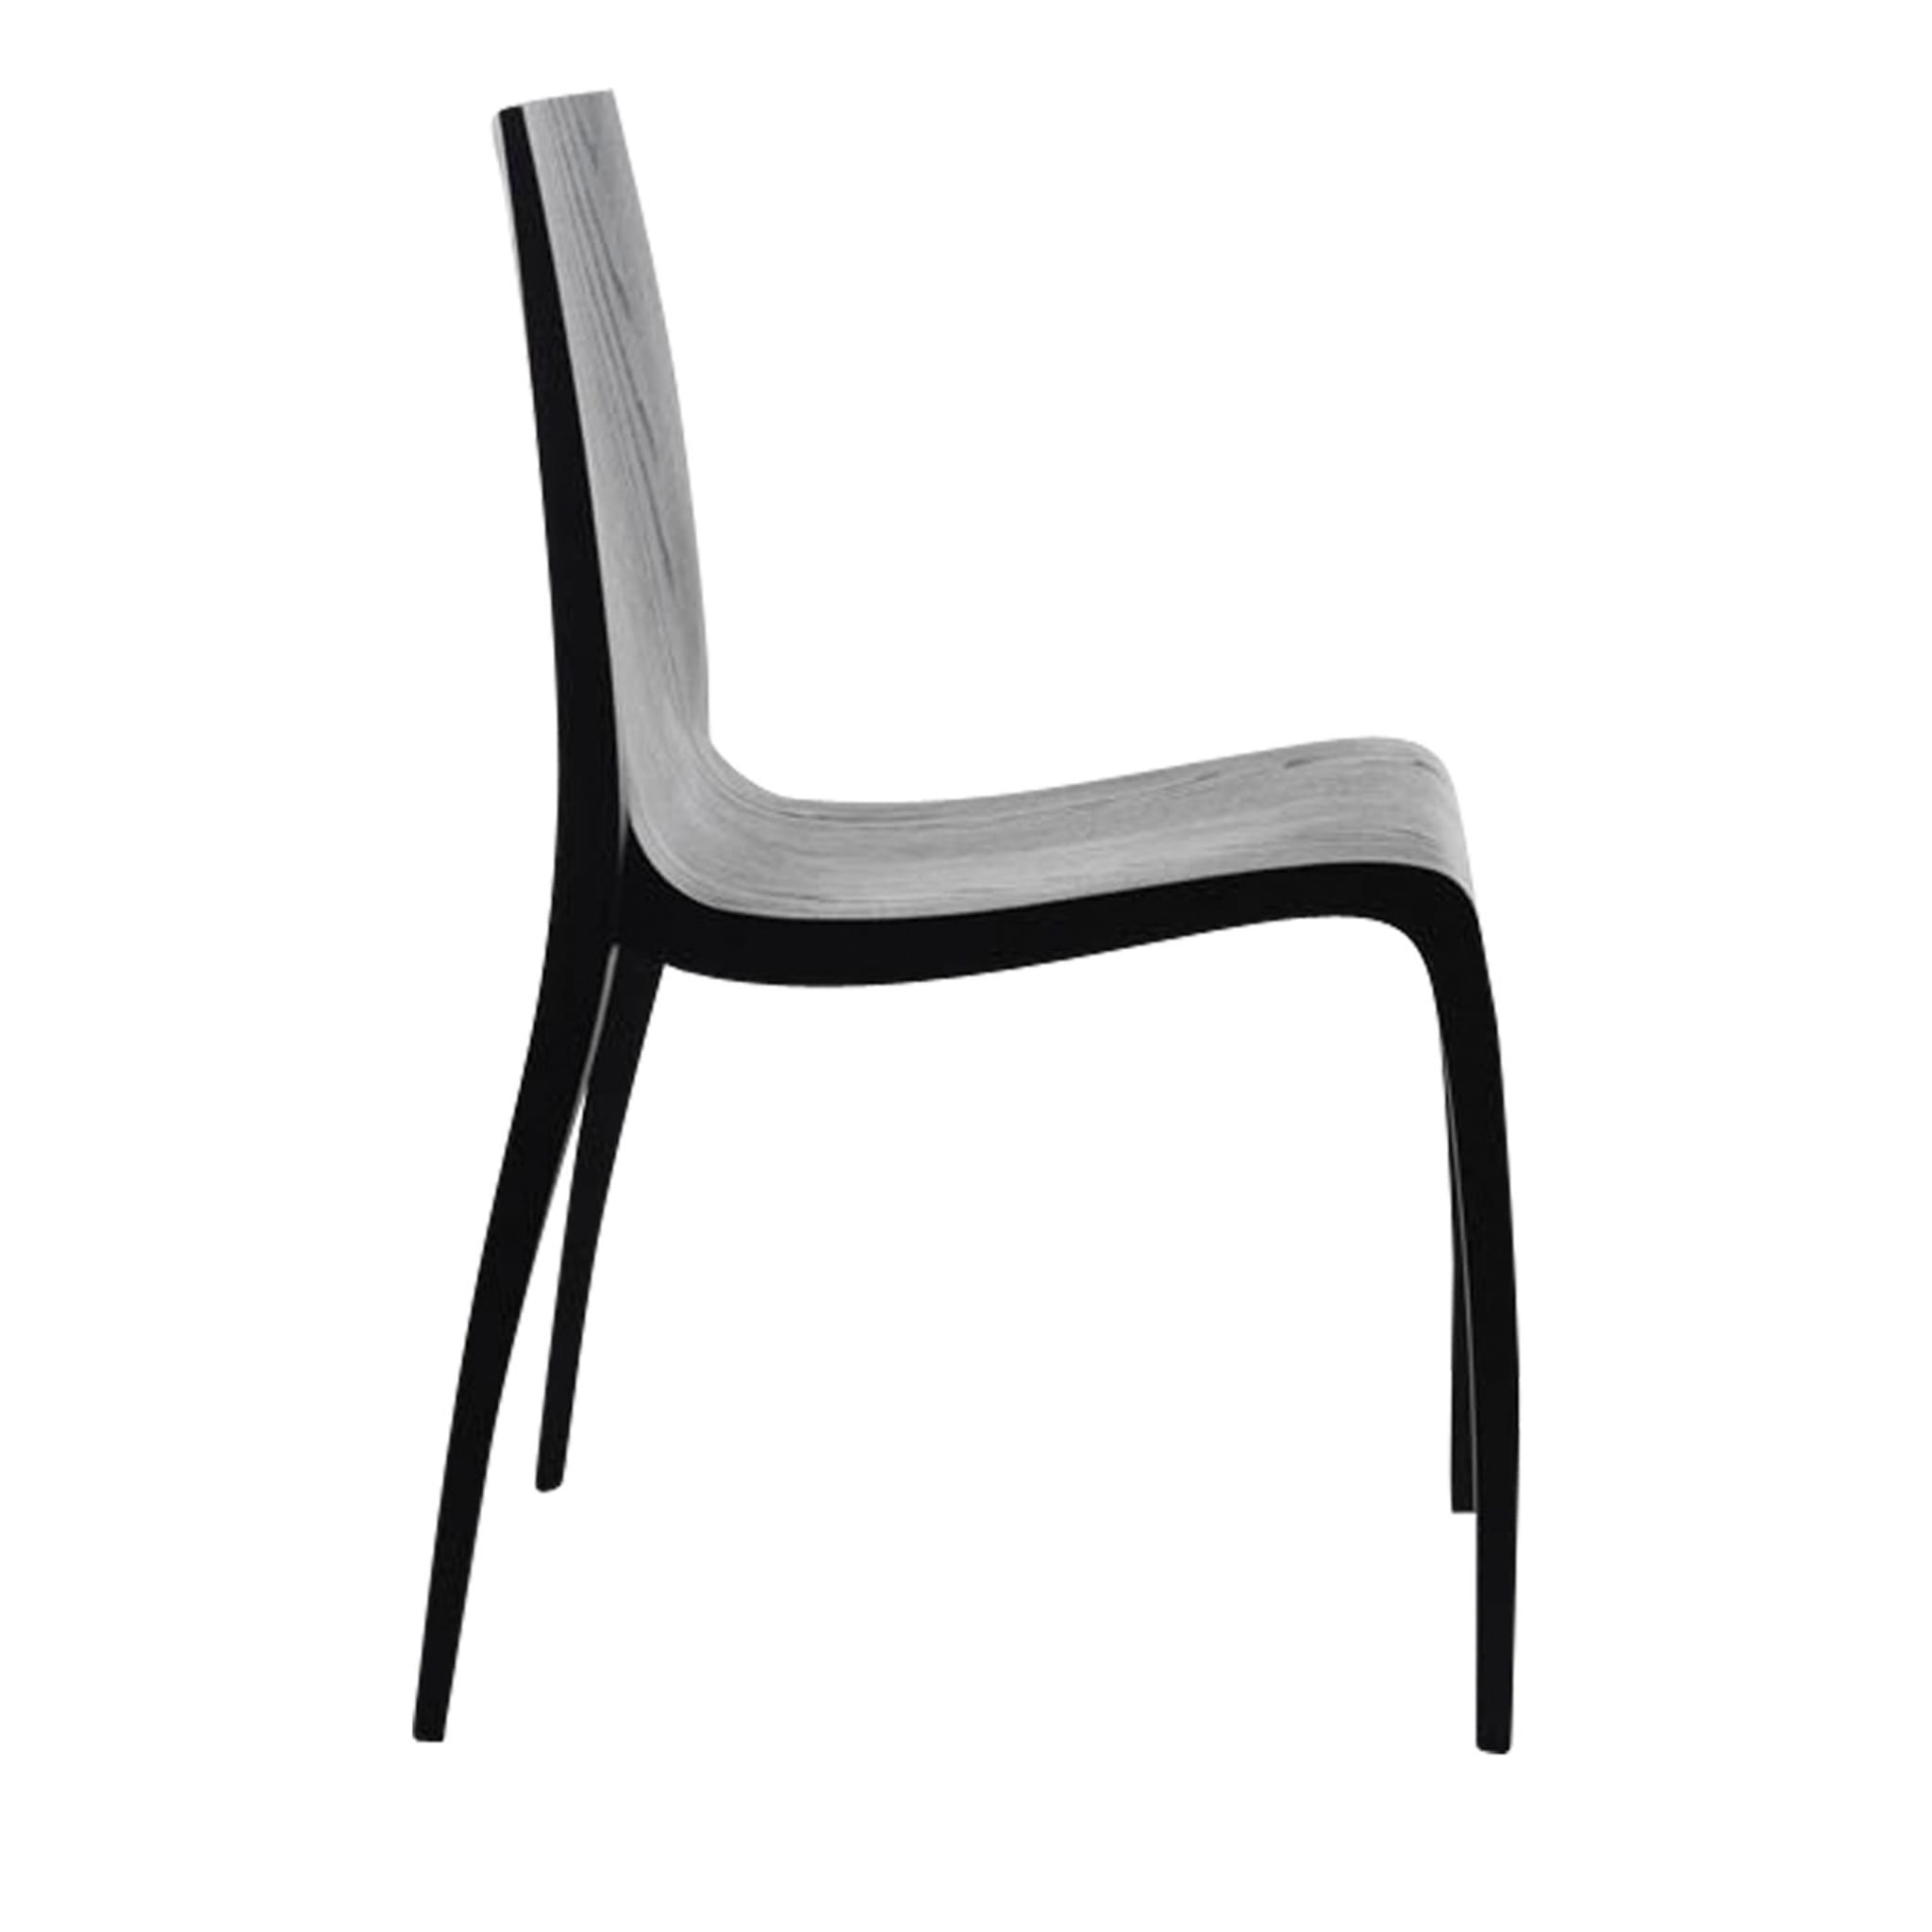 Ki Black Chair by Mario Bellini - Main view